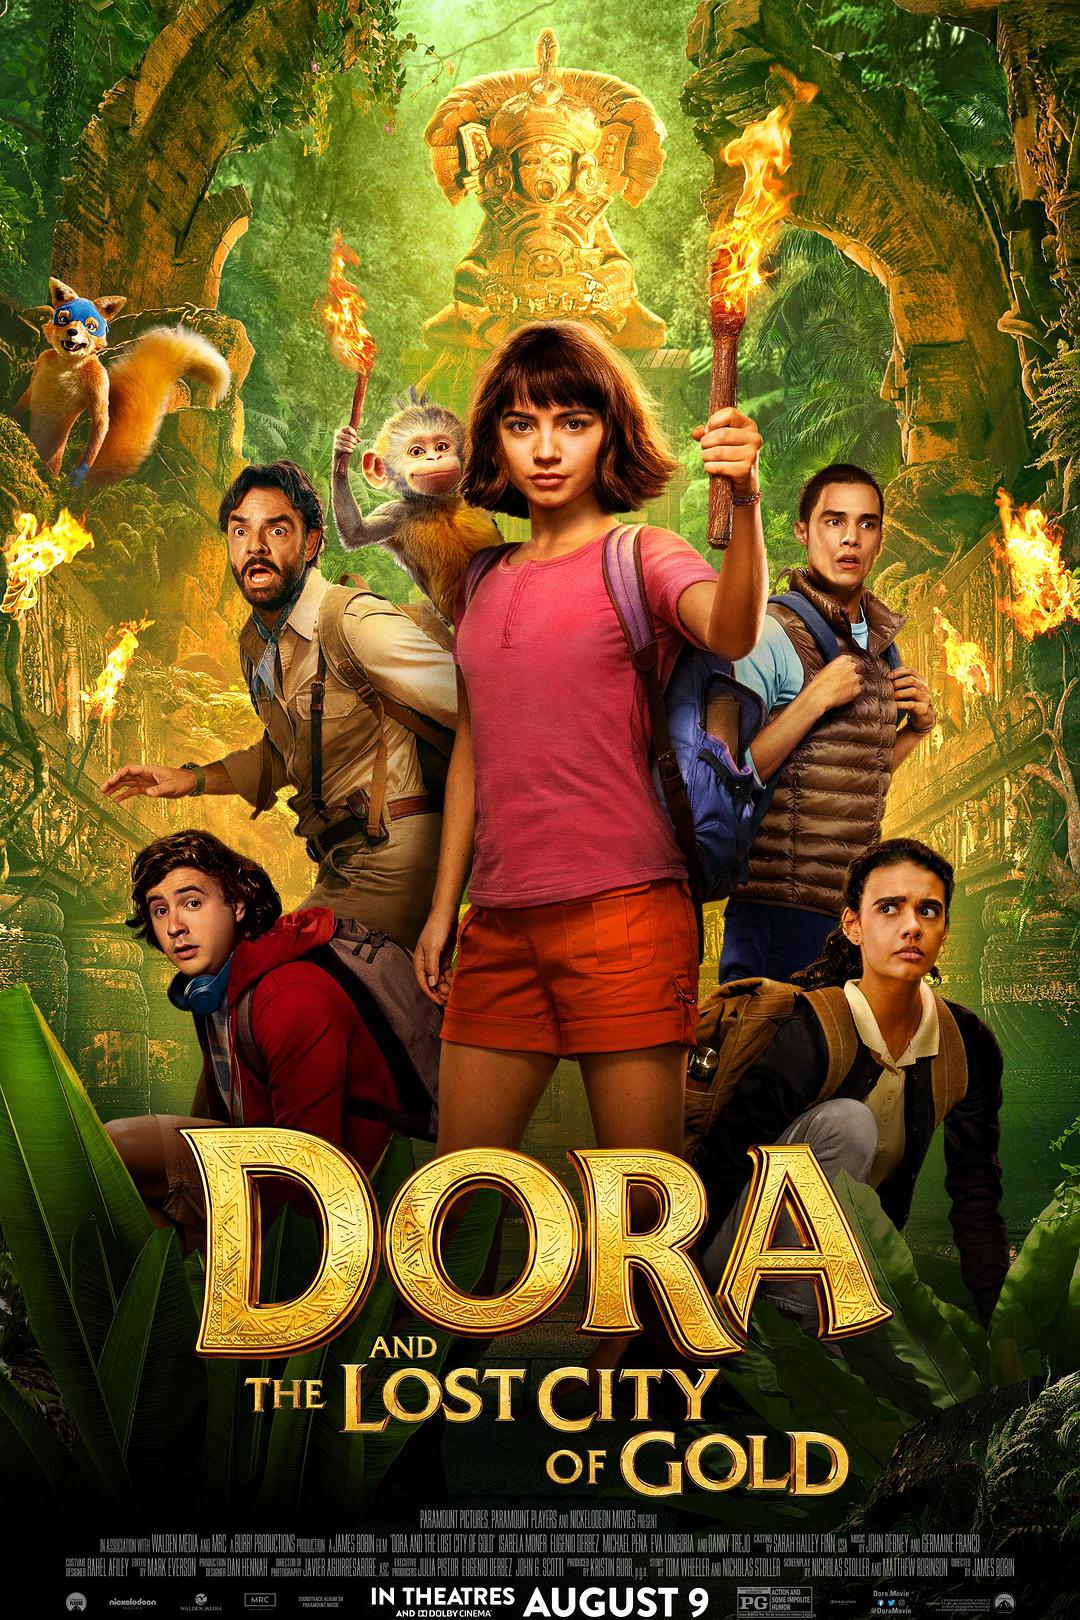 爱探险的朵拉:消失的黄金城 Dora.and.the.Lost.City.of.Gold.2019.720p.BluRay.x264.DTS-FGT 5.02G-1.png